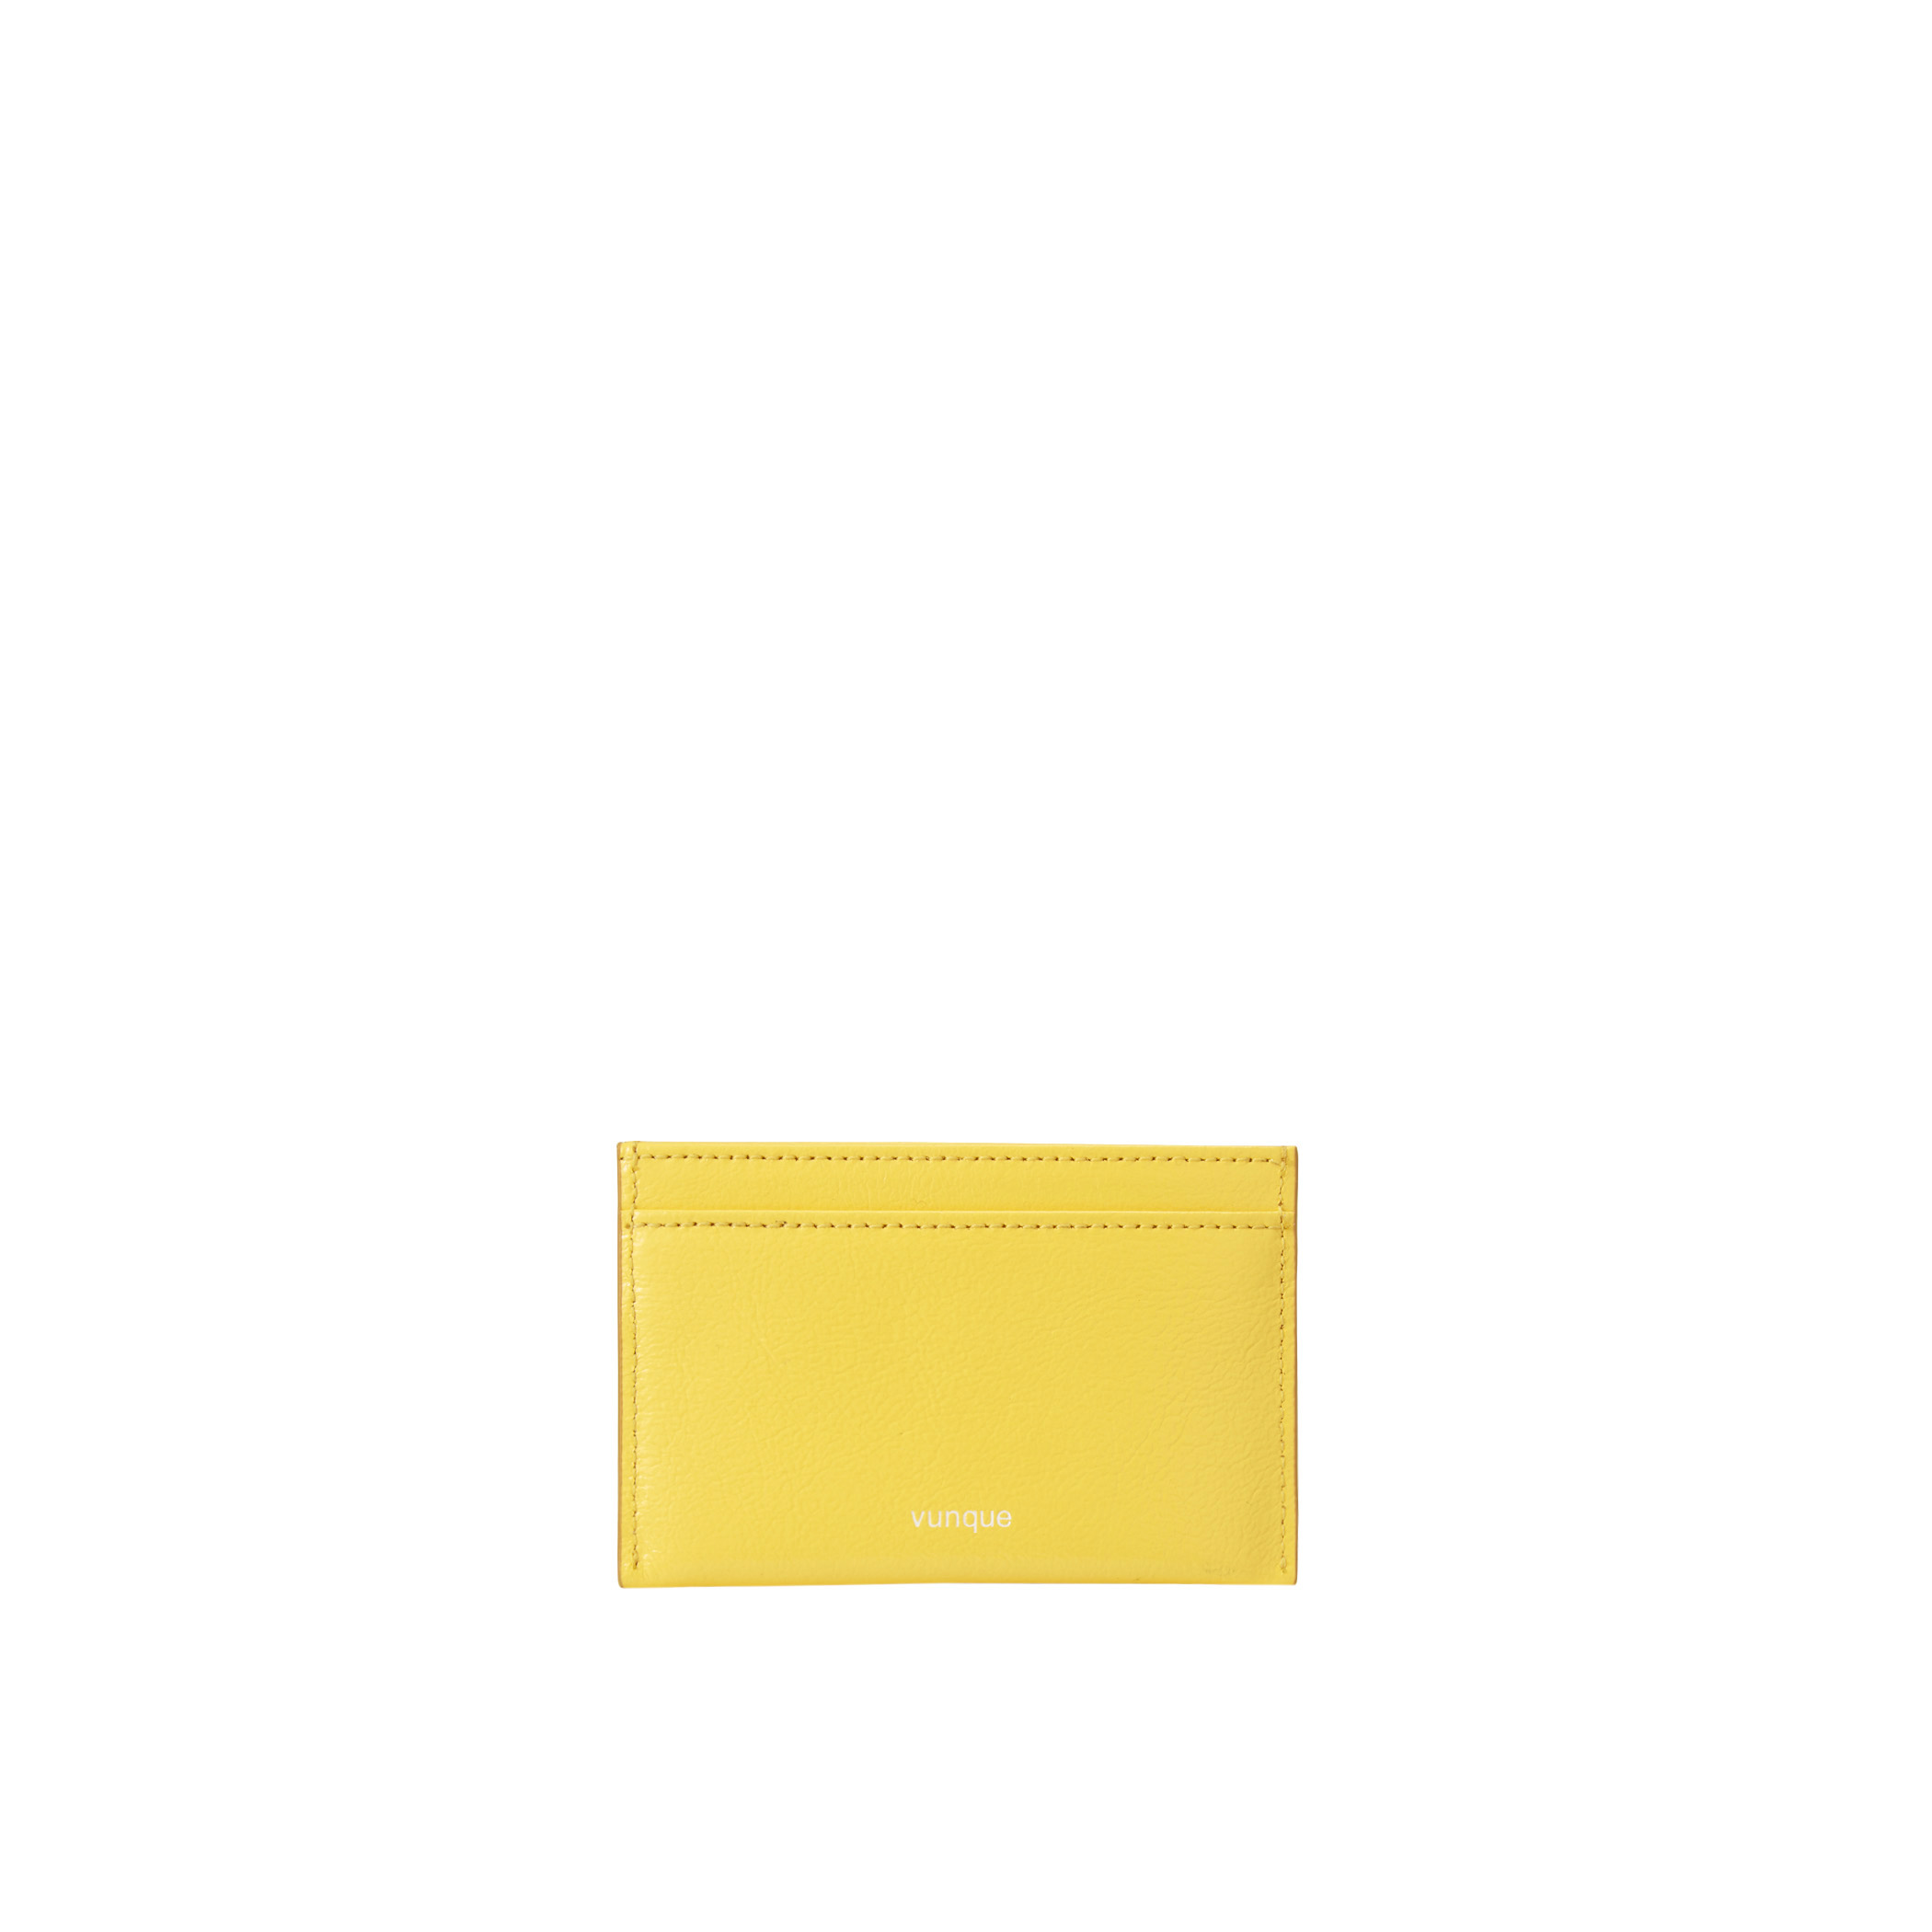 Occam Lune Card Wallet (오캄 룬 카드지갑) Honey Yellow